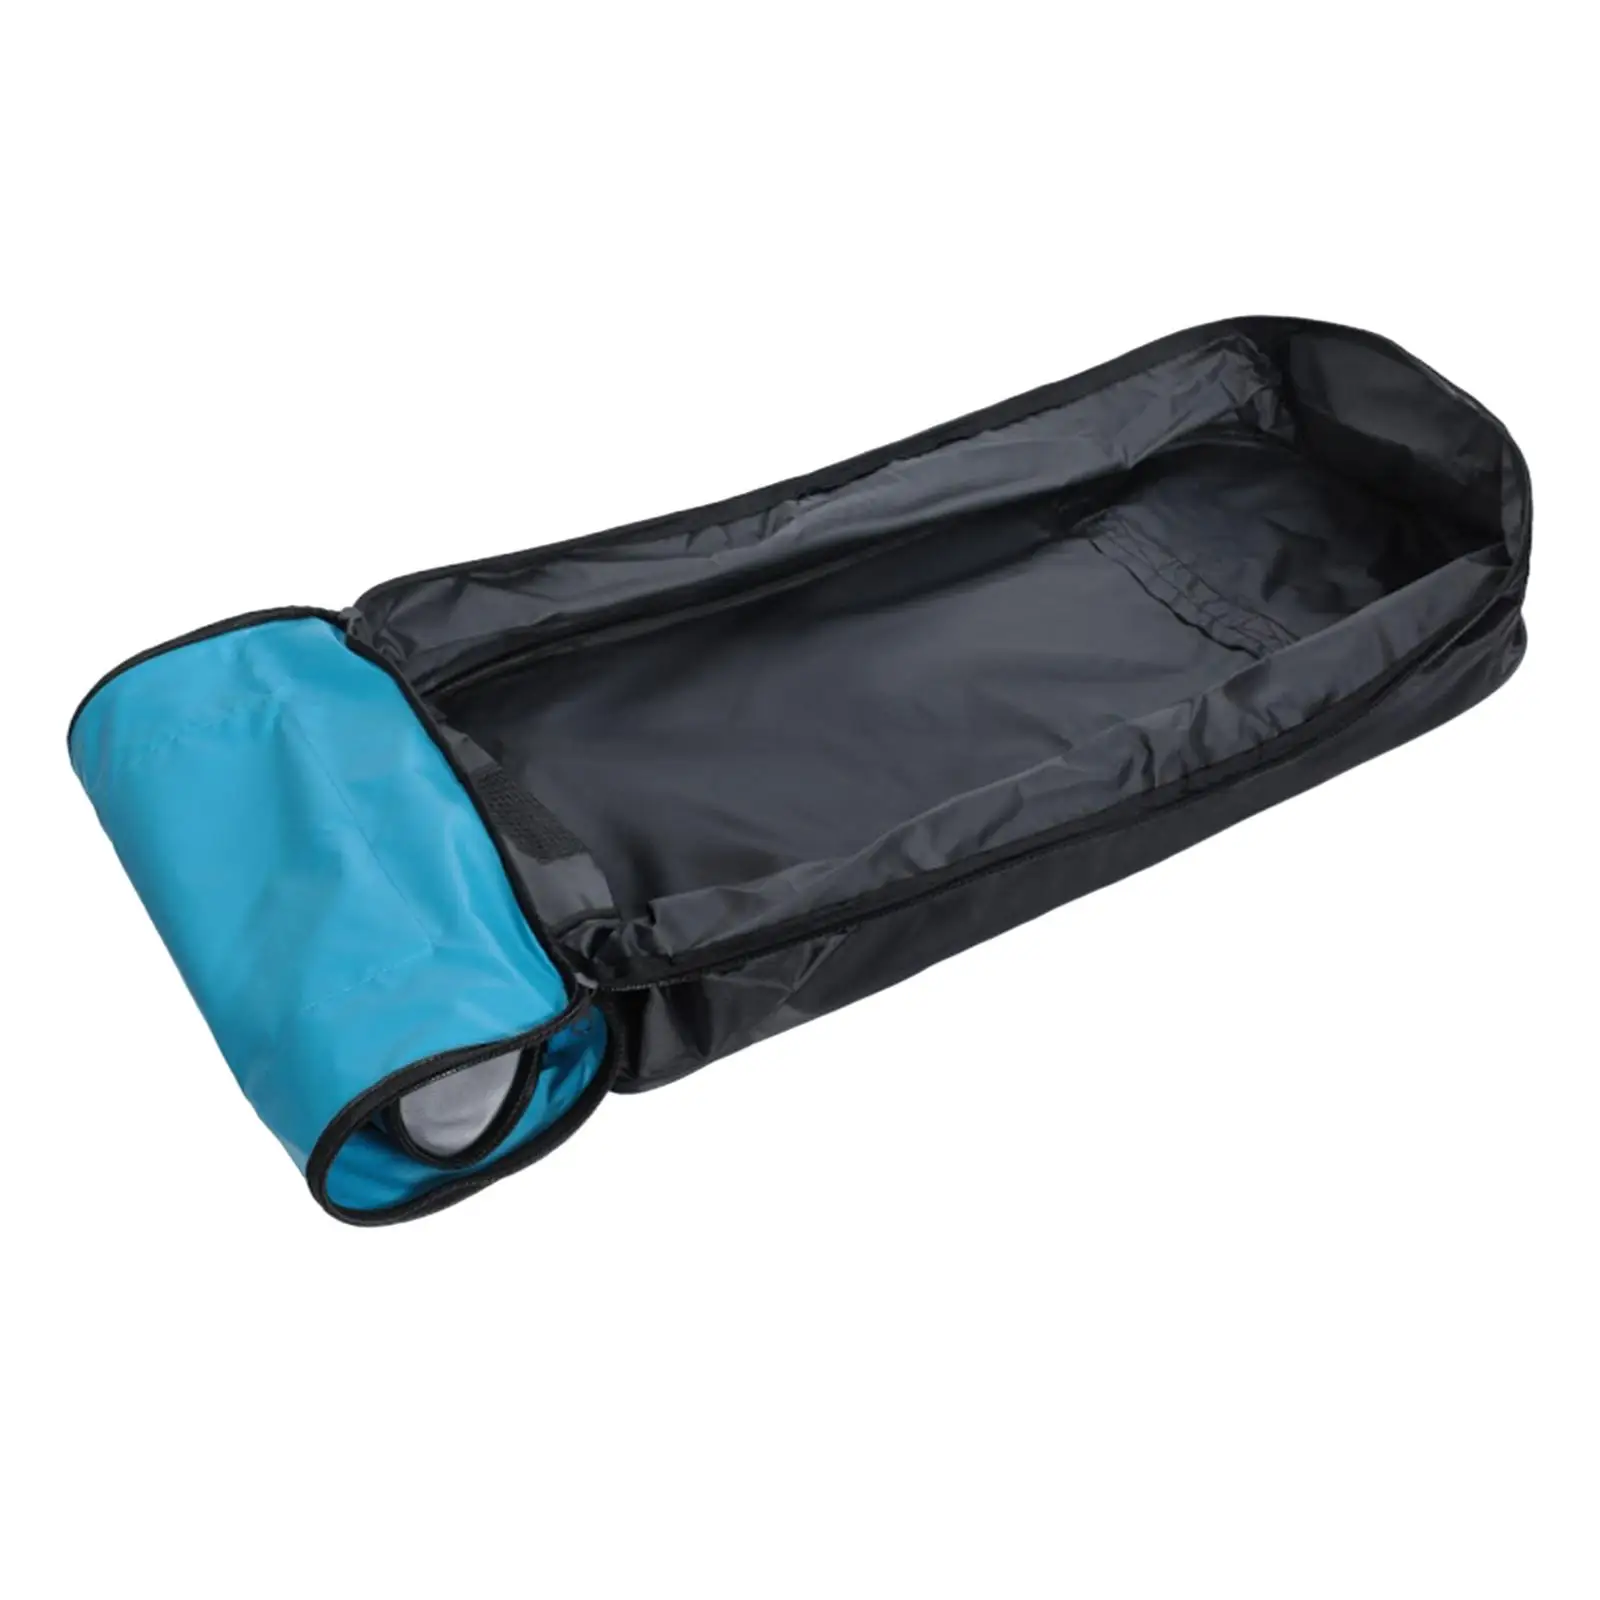 Inflatable Paddle Board Backpack Carrier Adjustable Straps Stand up Paddle Board Bag for Surfboard Longboard Shortboard Surfing